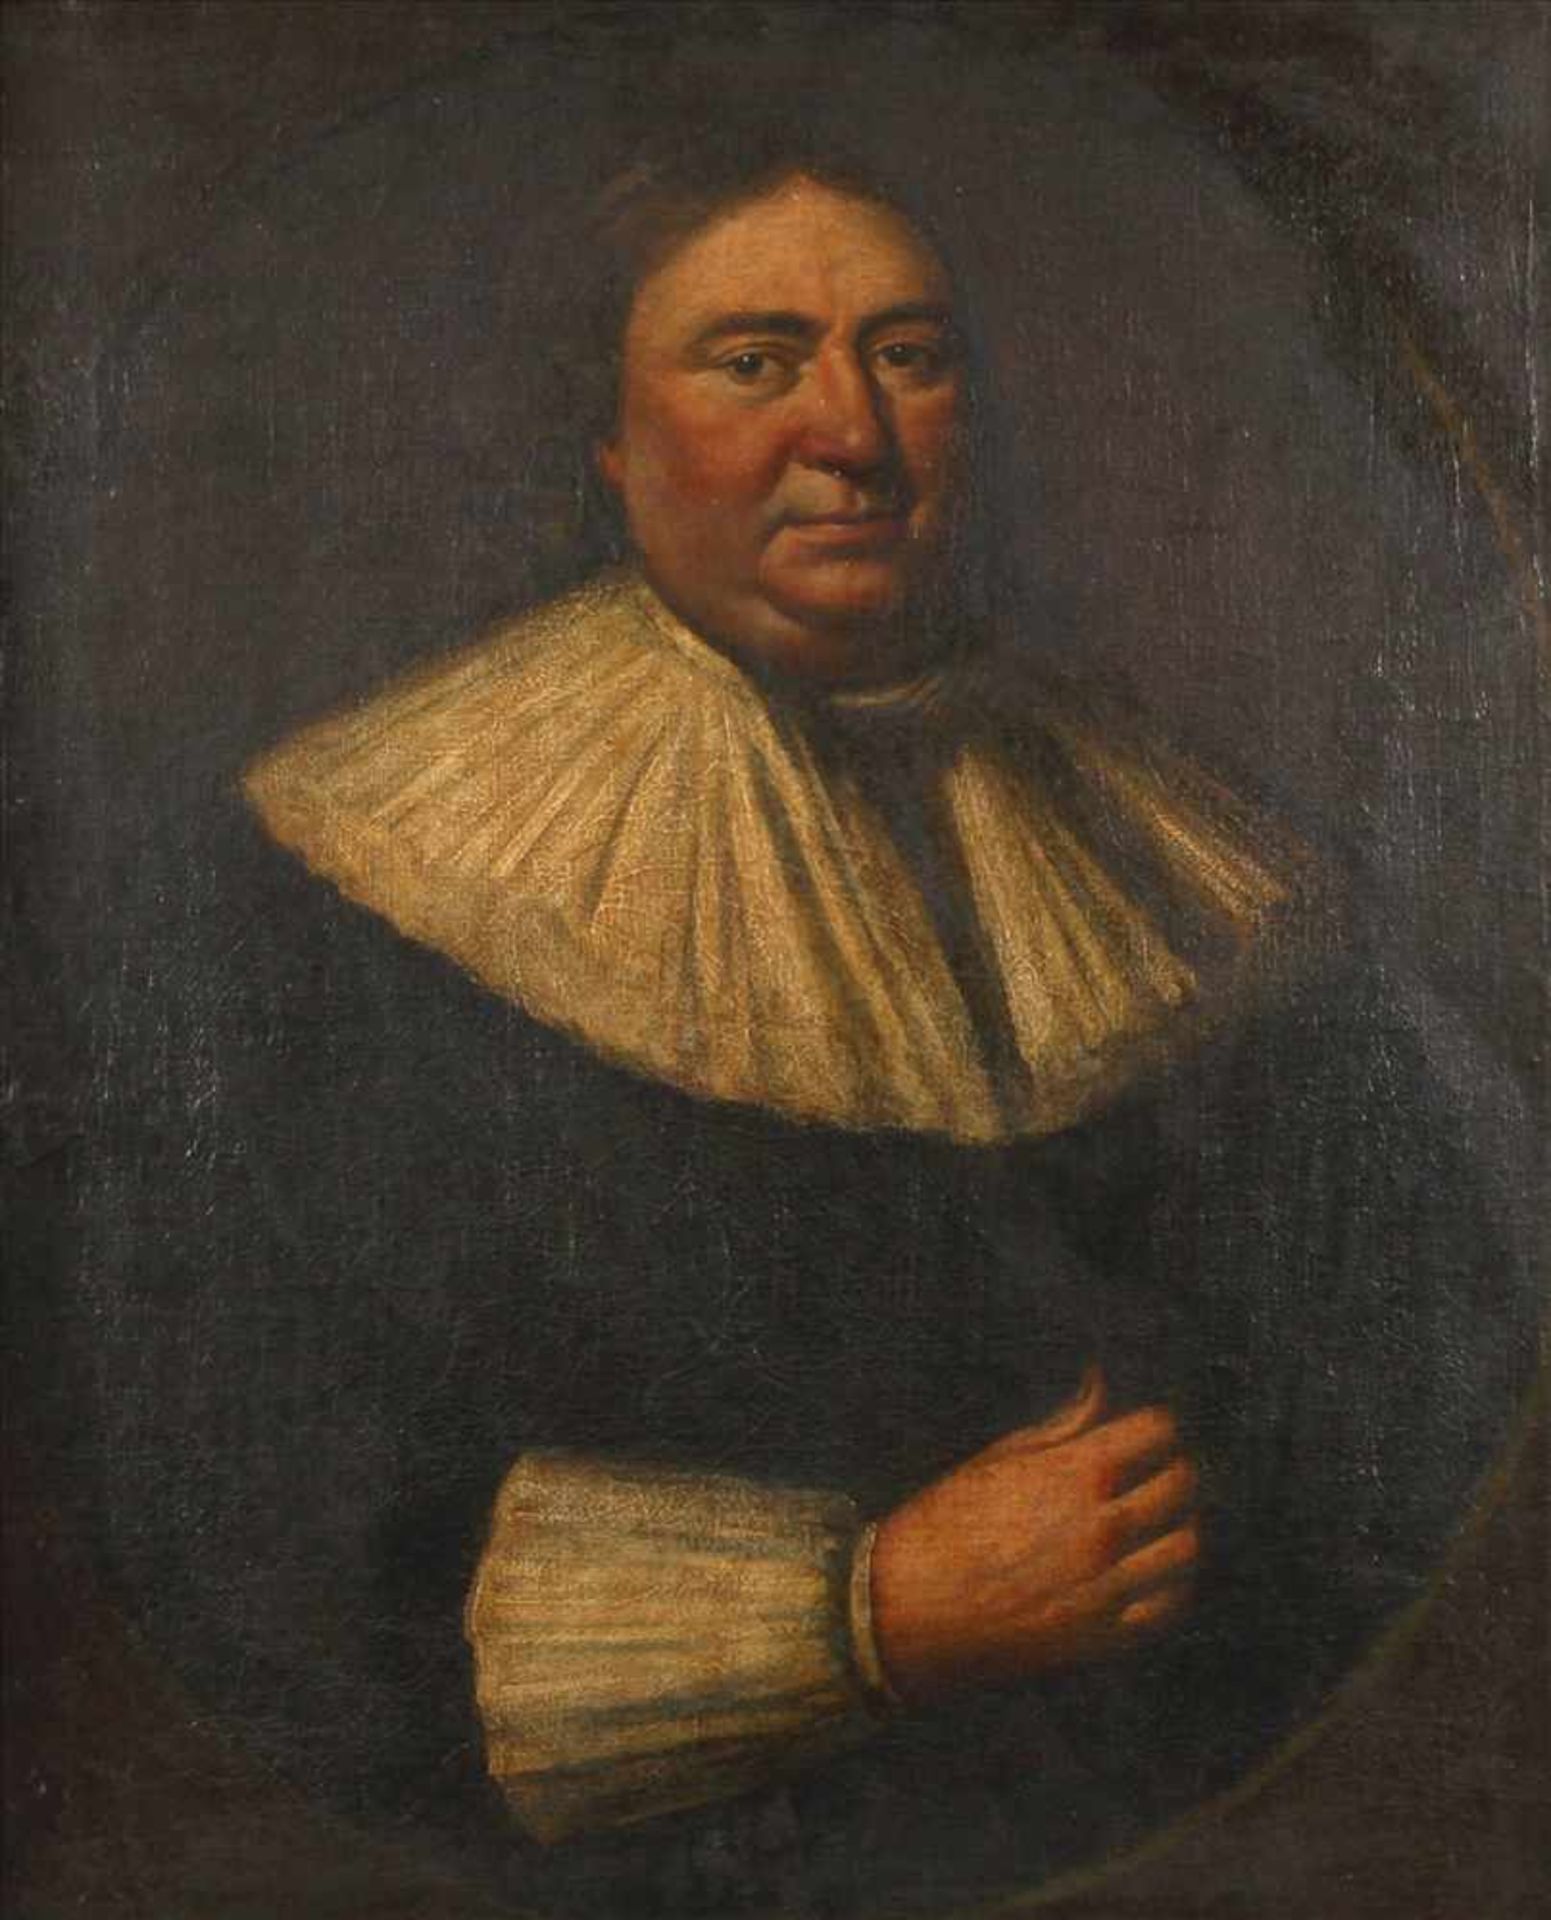 Barockes HerrenportraitBrustbildnis eines korpulenten Herrn mittleren Alters in Amtstracht aus